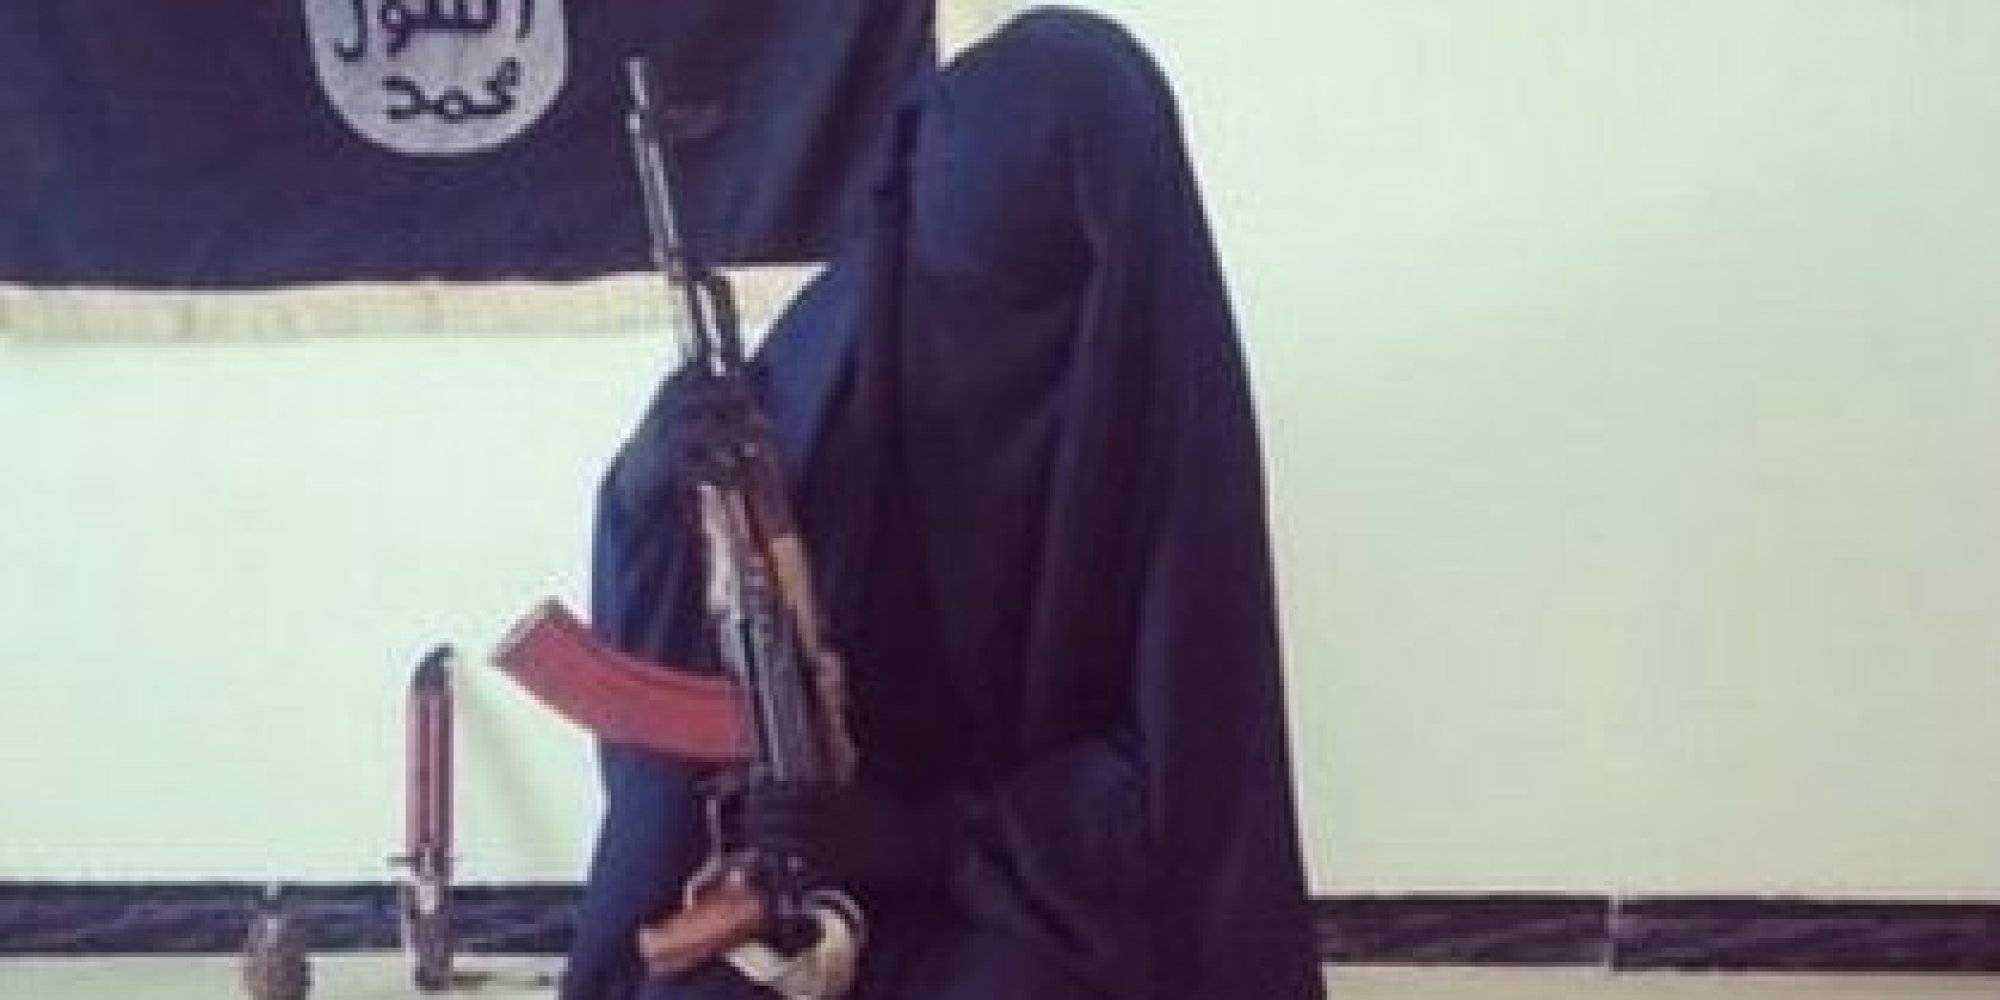 British Female Jihadists Are Running Brothels Full Of